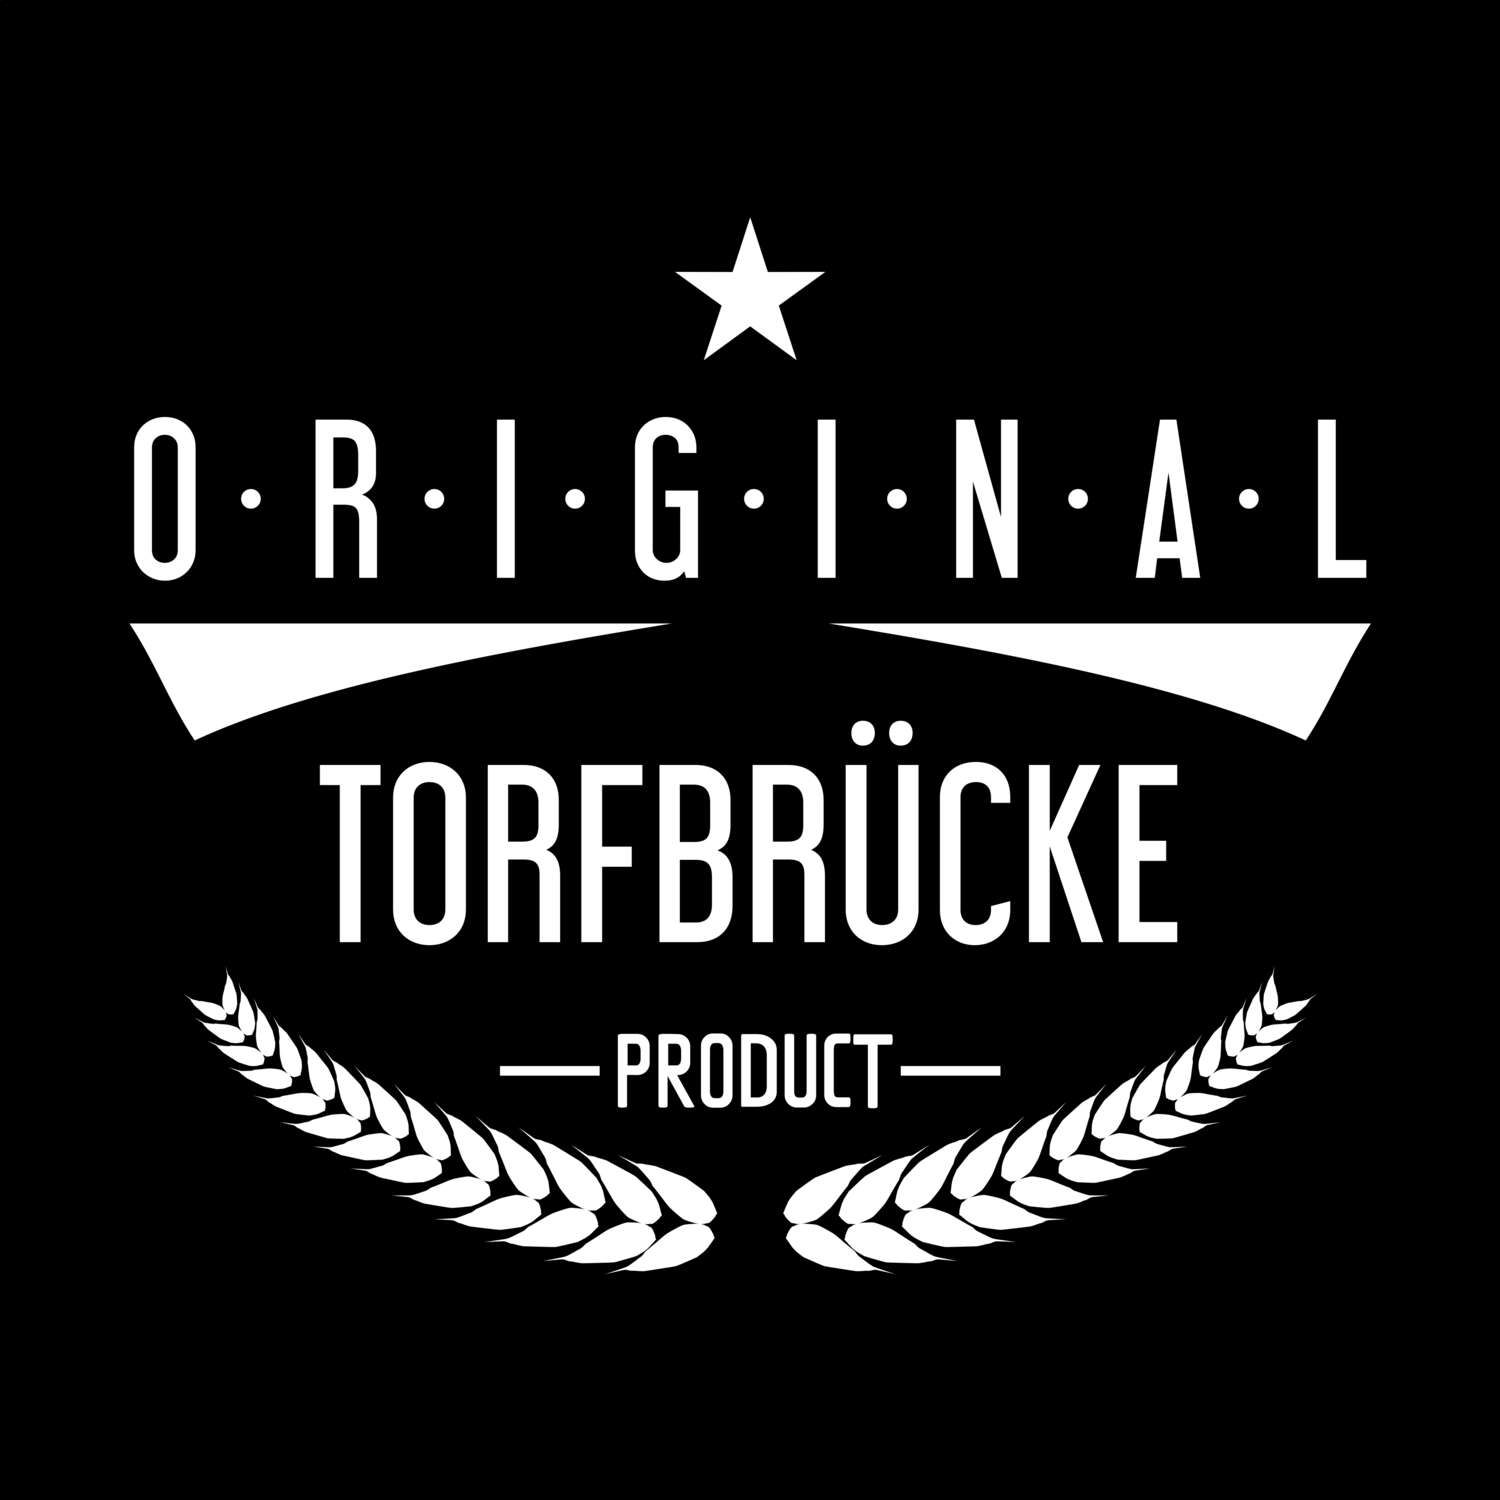 Torfbrücke T-Shirt »Original Product«